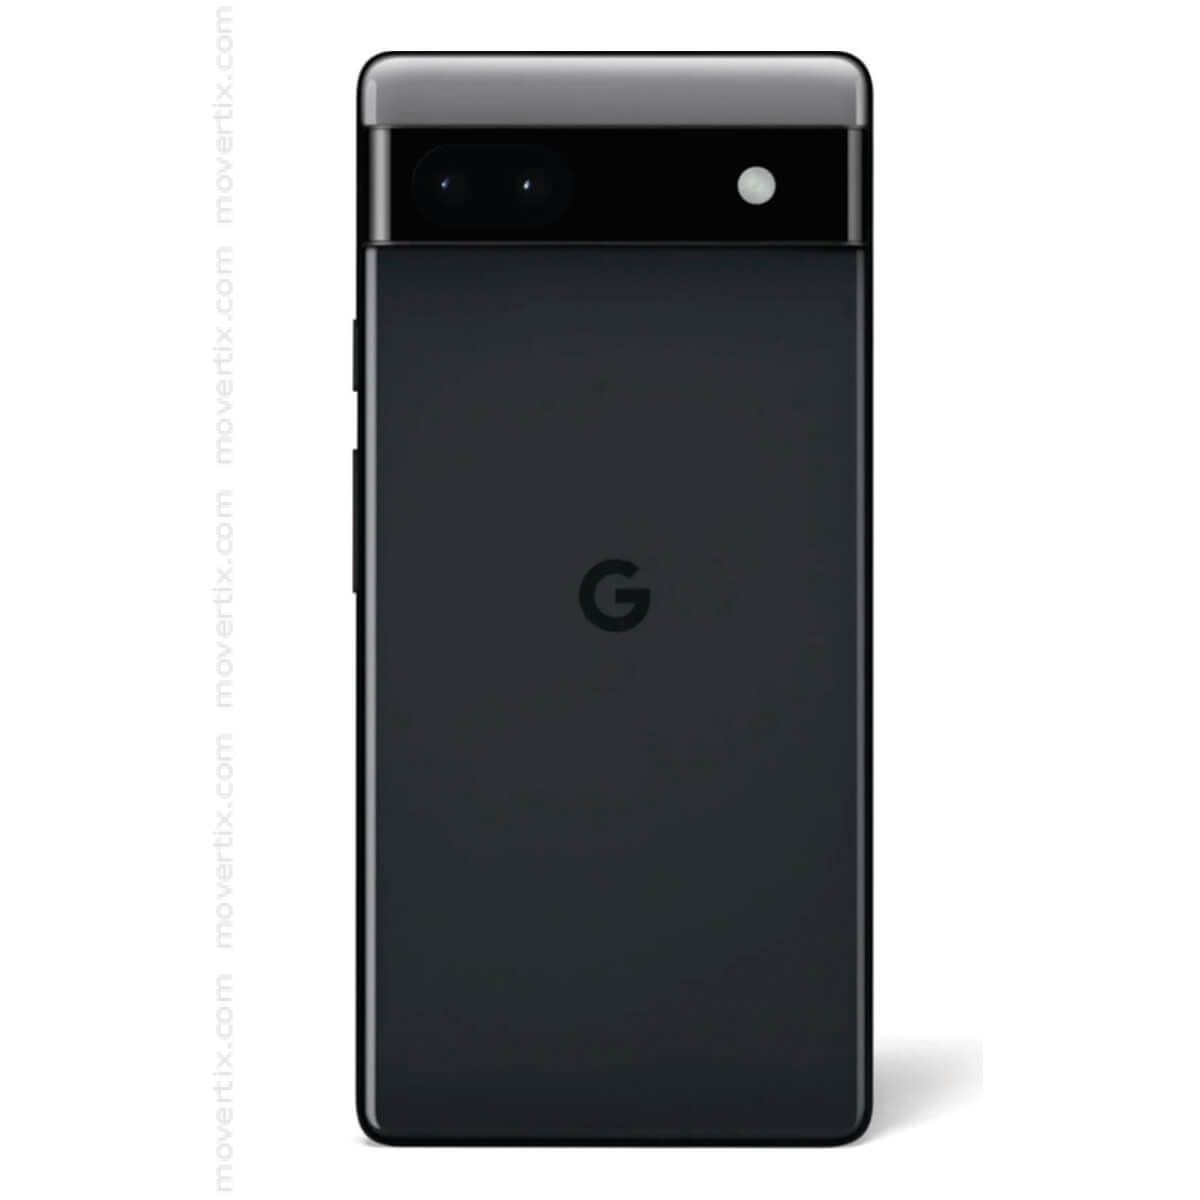 Google Pixel 6a 5G Charcoal 128GB (810029934961) | Movertix Mobile